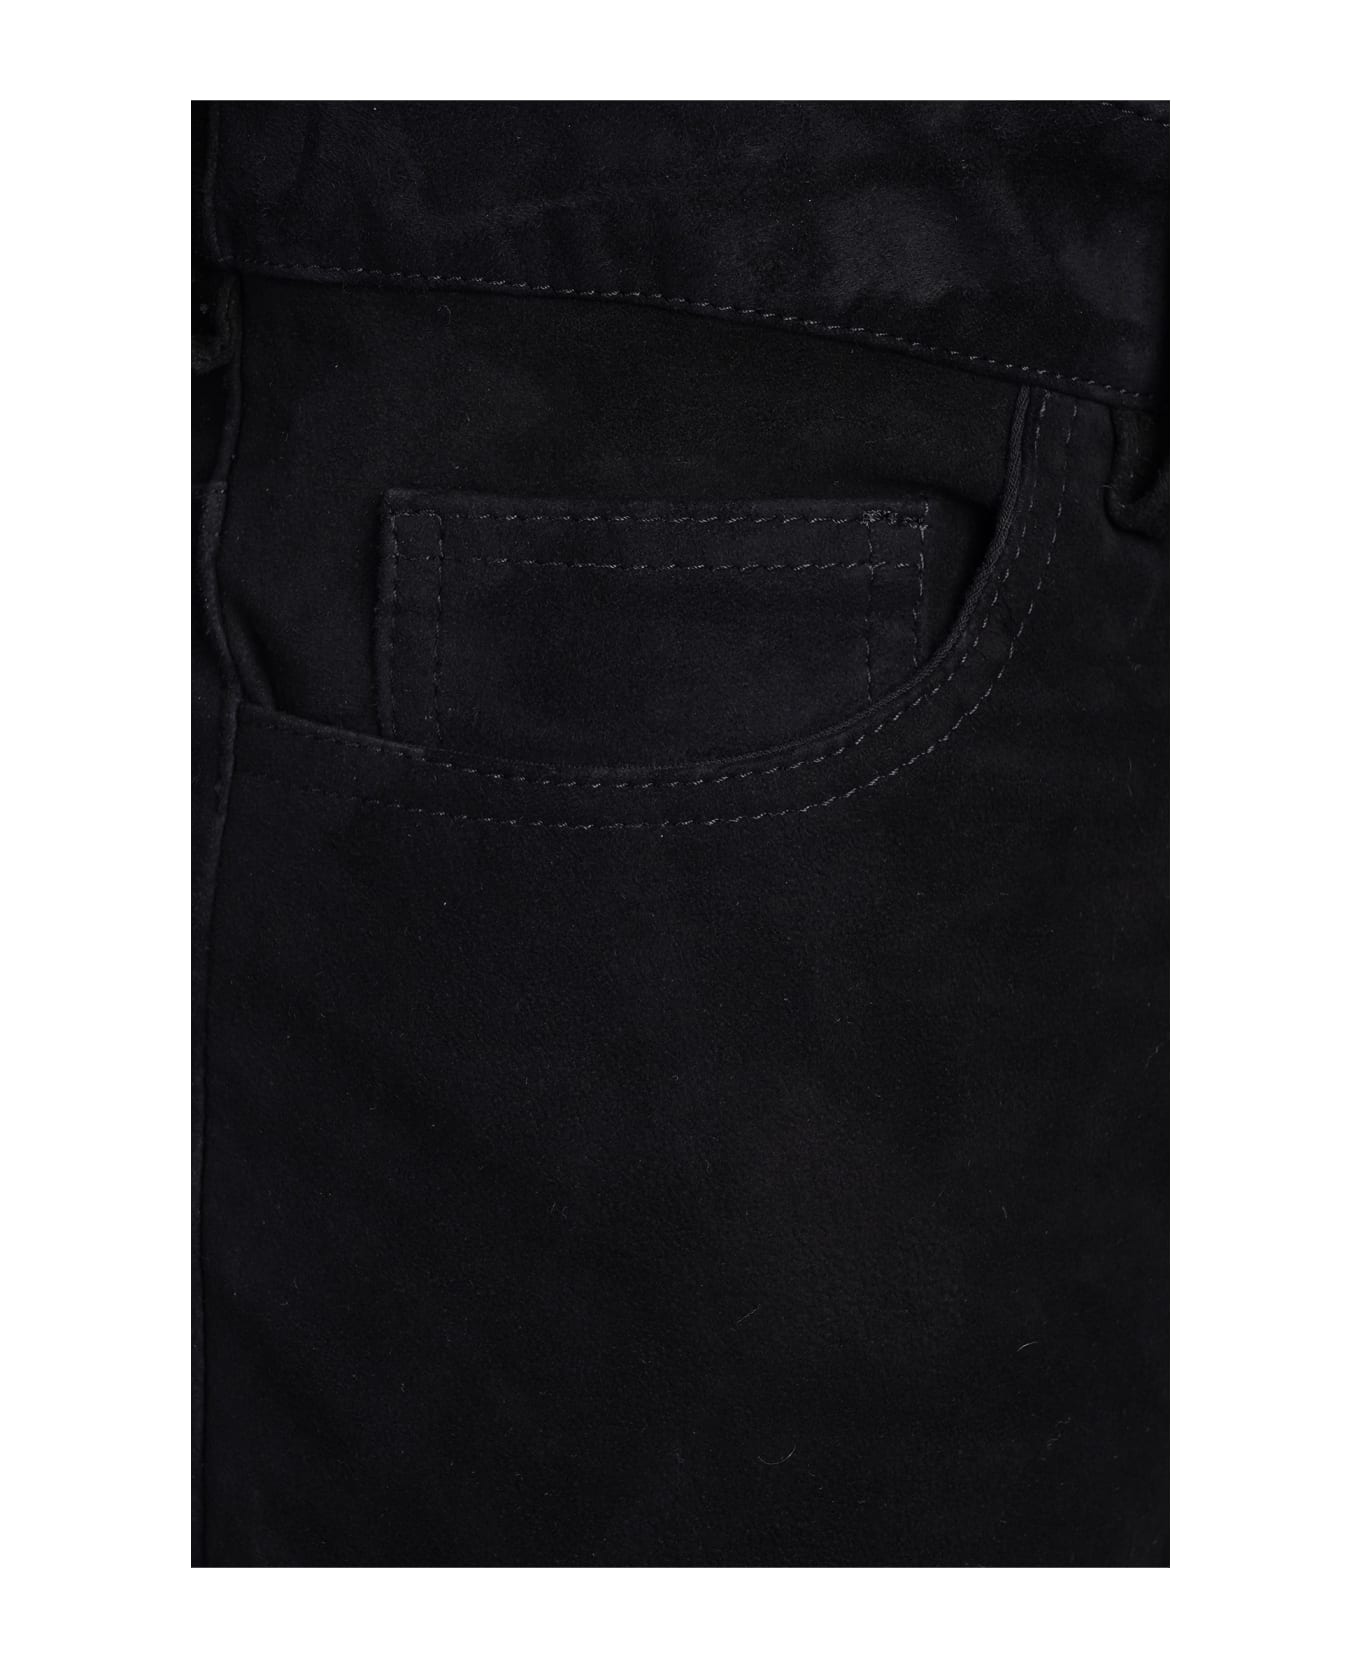 Salvatore Santoro Pants In Black Leather - black